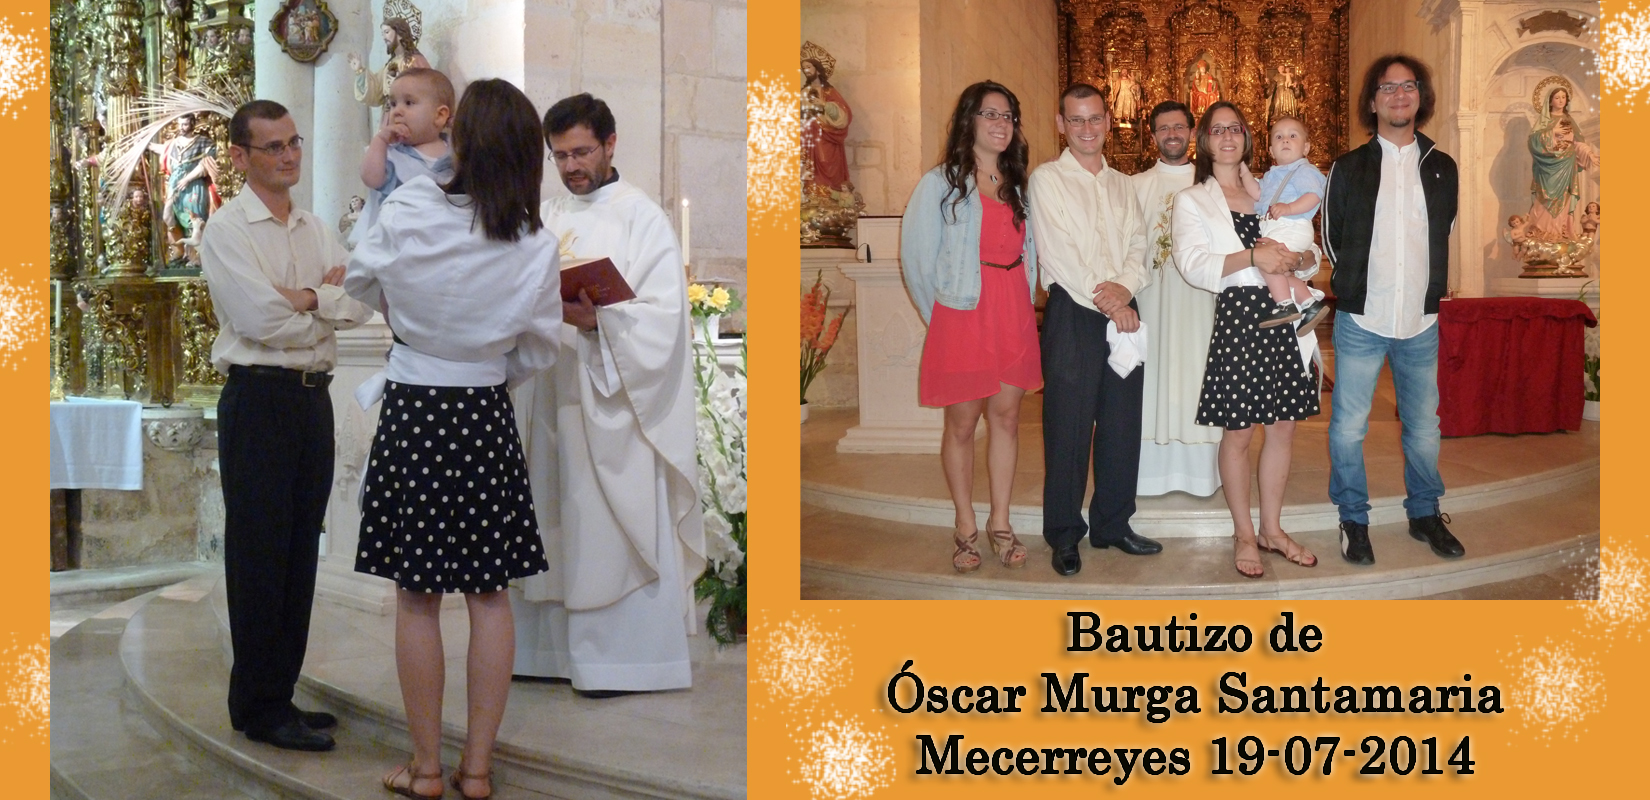 Bautizo de Oscar Murga Santamaria, Mecerreyes 19-07-2014